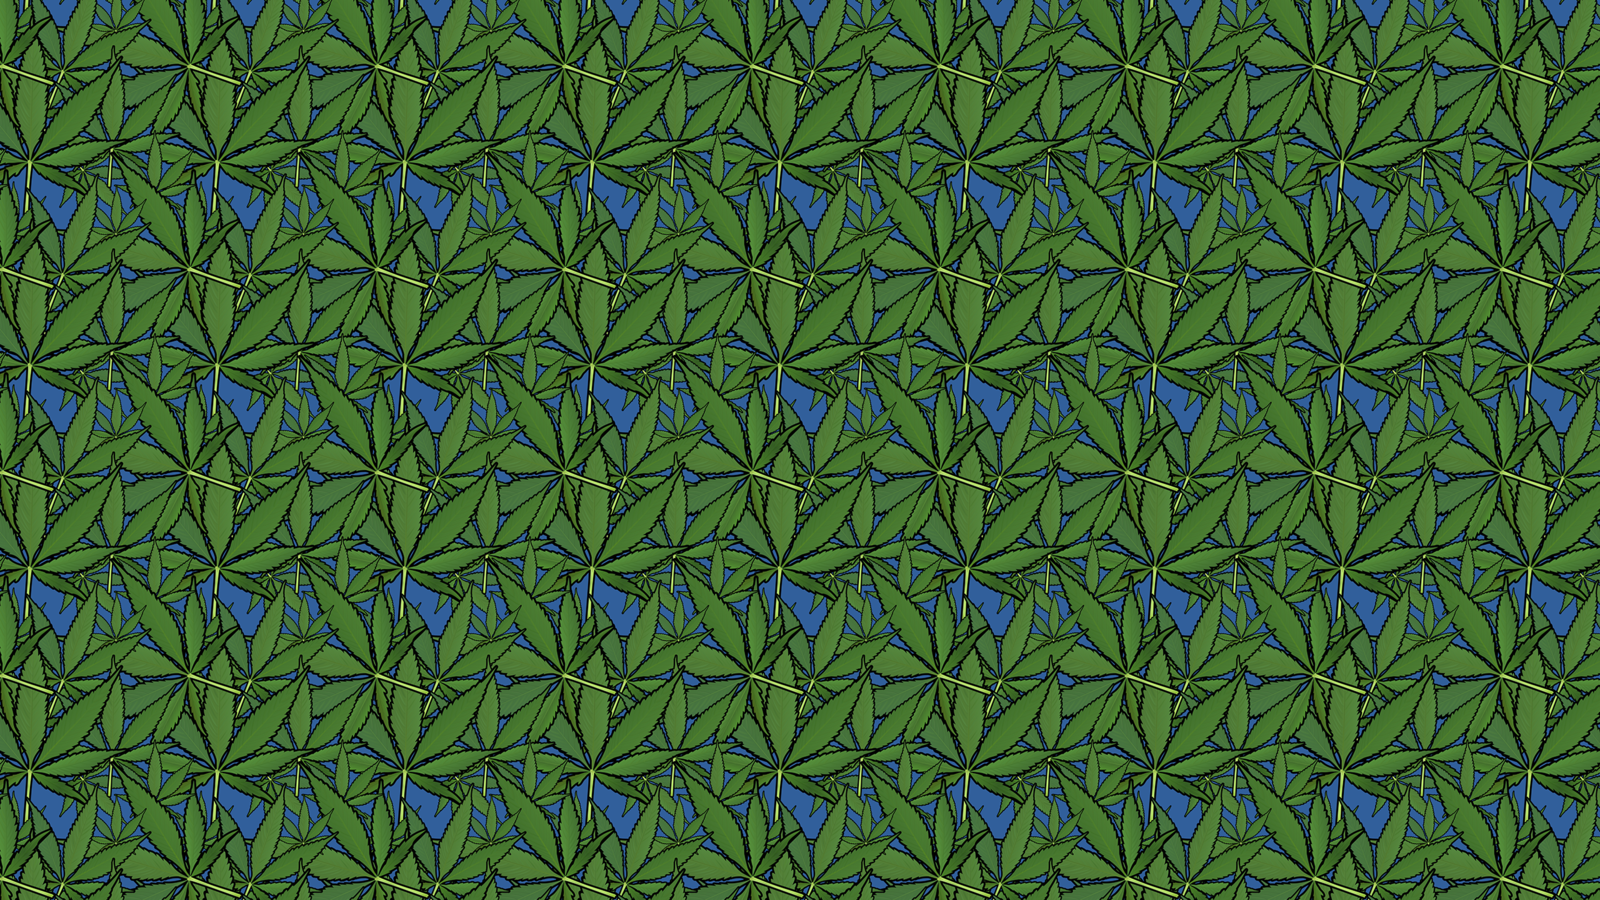 Marijuana Background Weed Leaf Tiled By Samp127